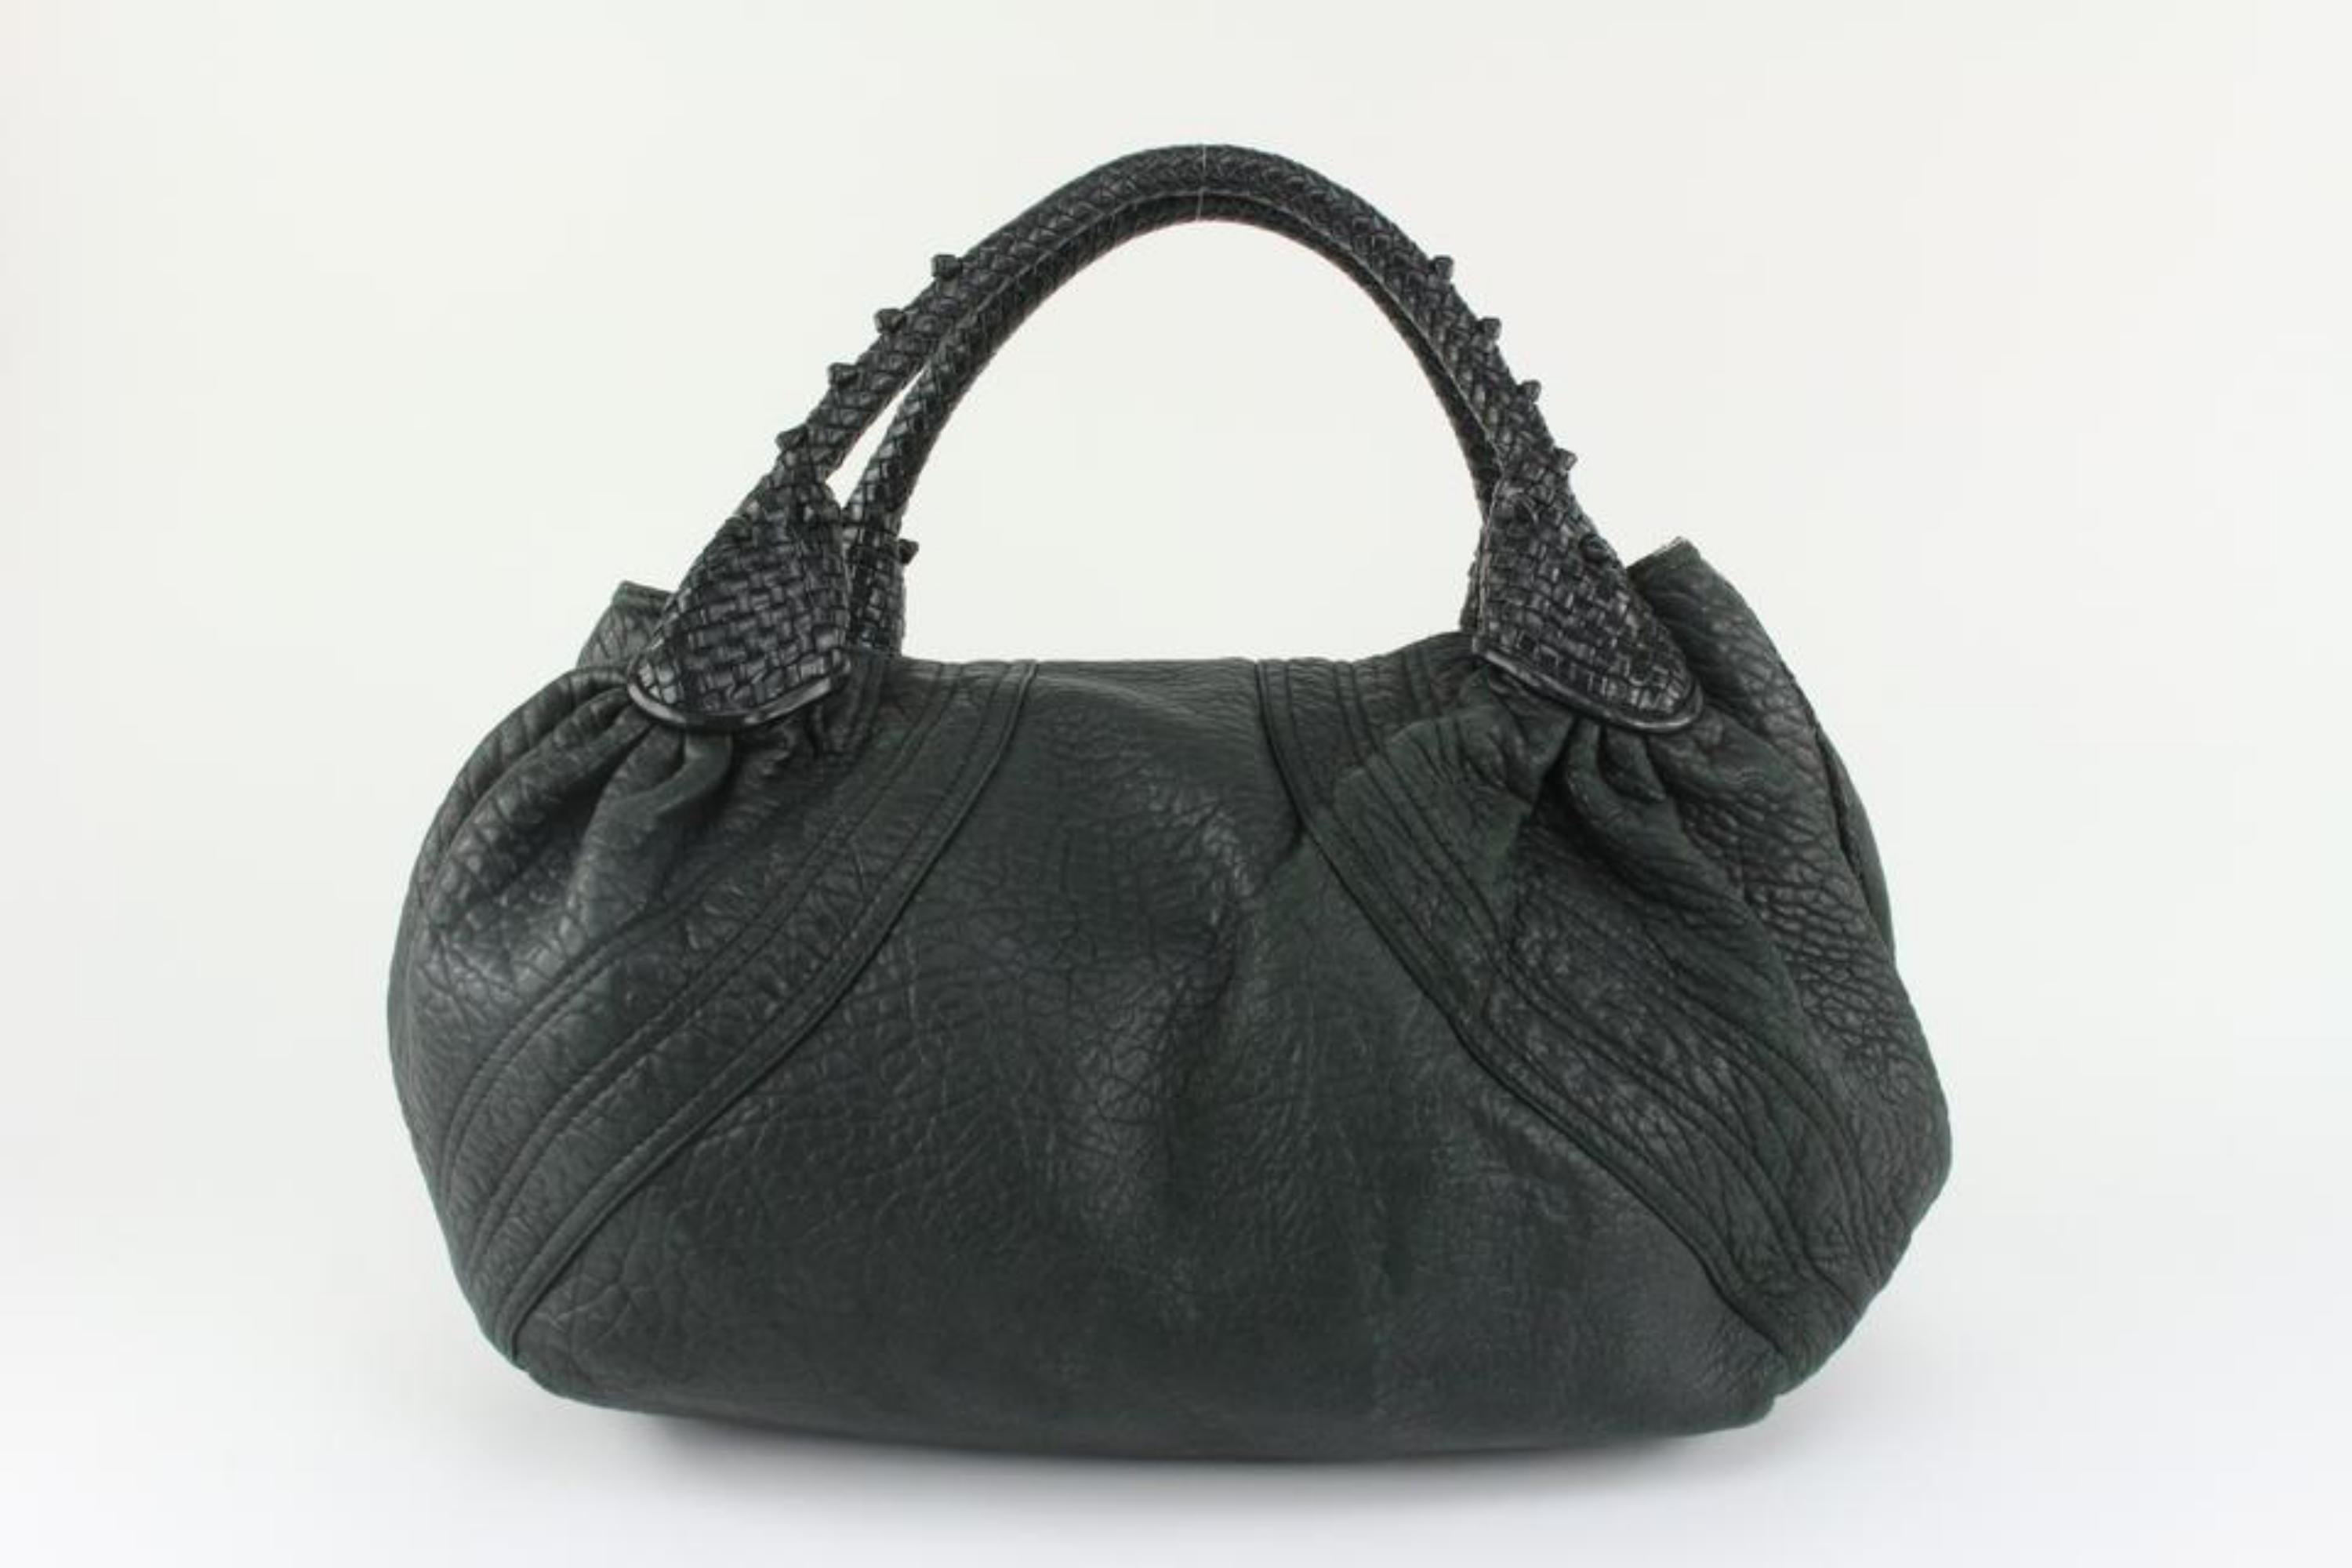 Fendi Black Leather Spy Bag Hobo 1130f21 2